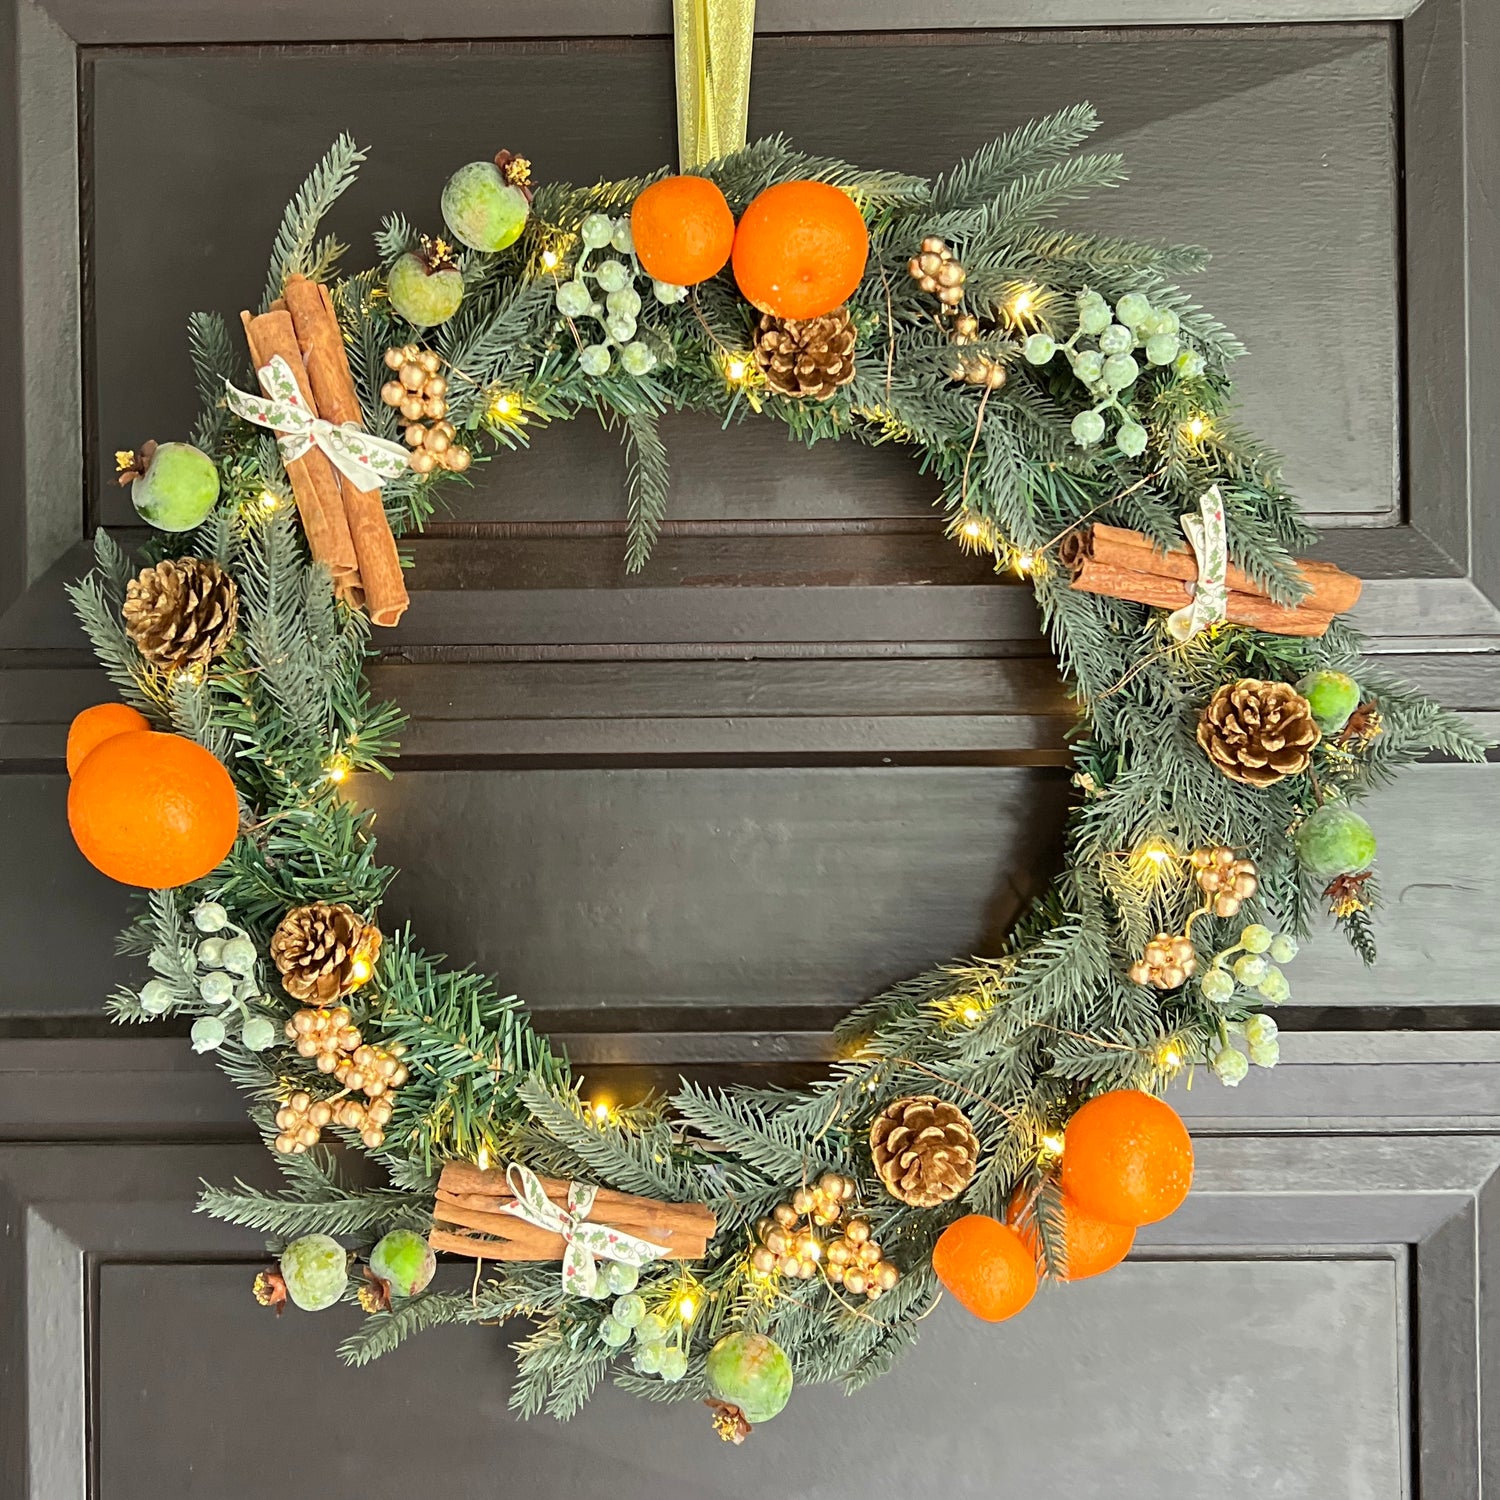 Festive orange and berry wreath